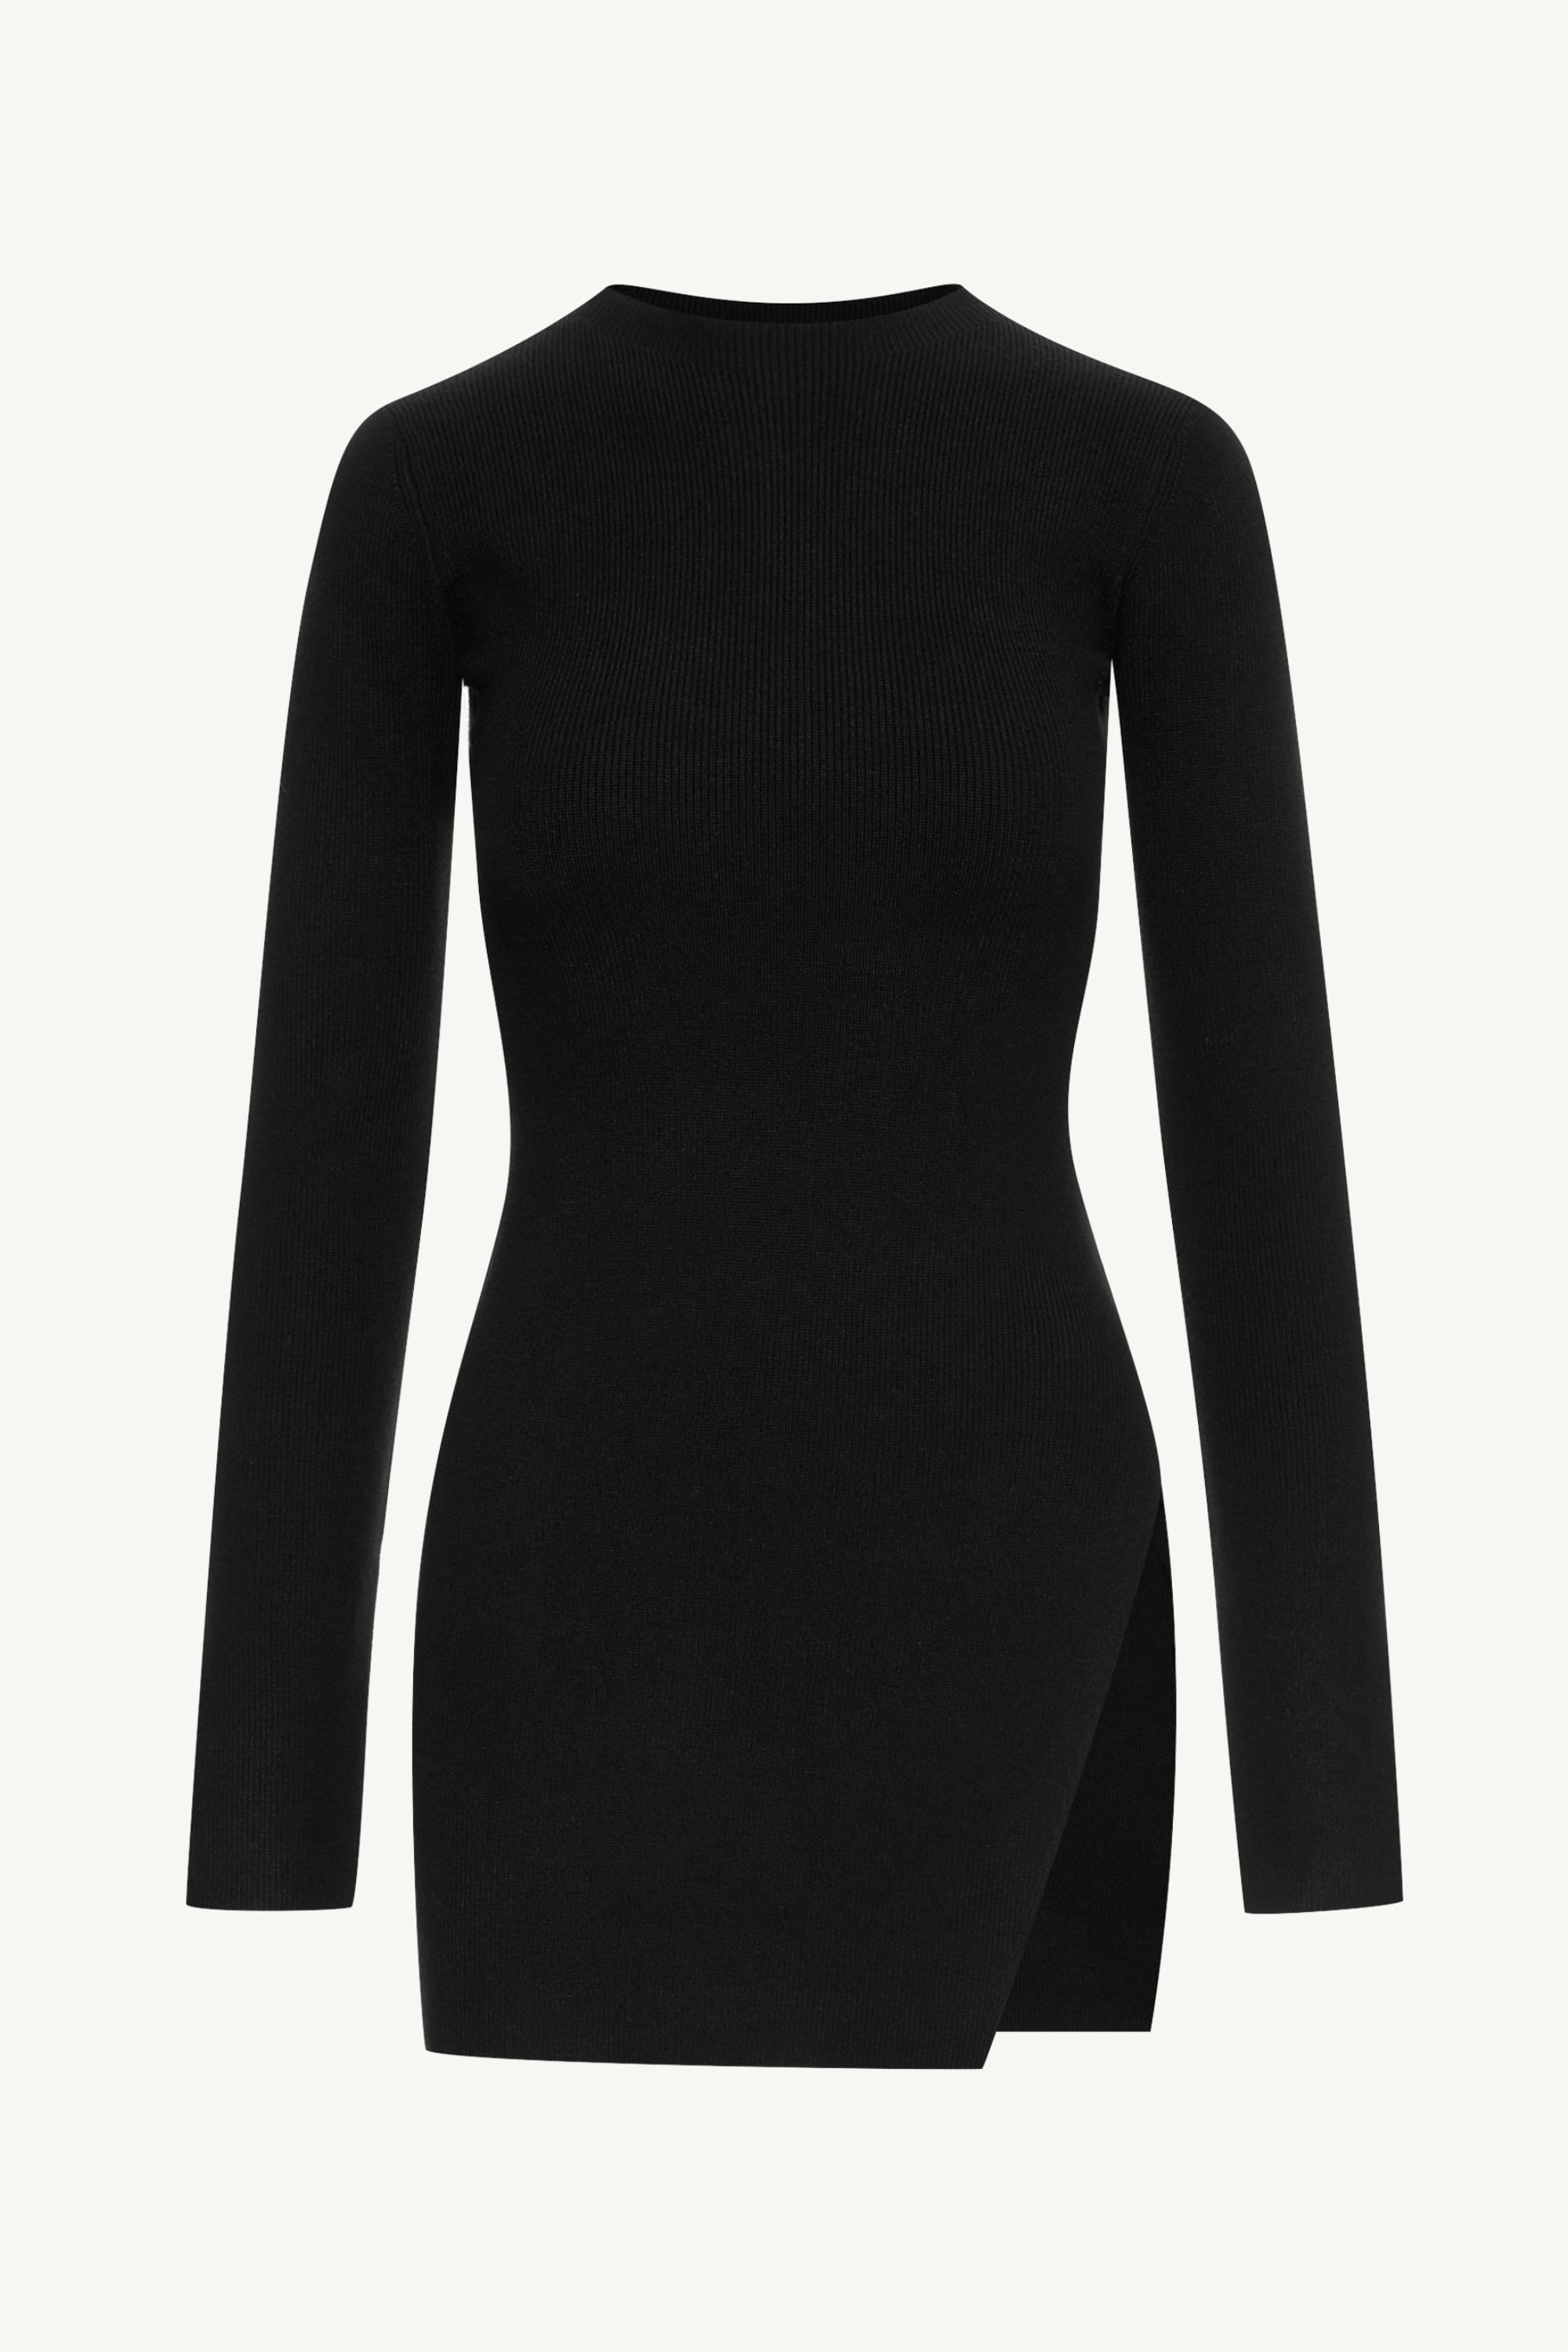 Inaya Ribbed Side Slit Top - Black Clothing Veiled 